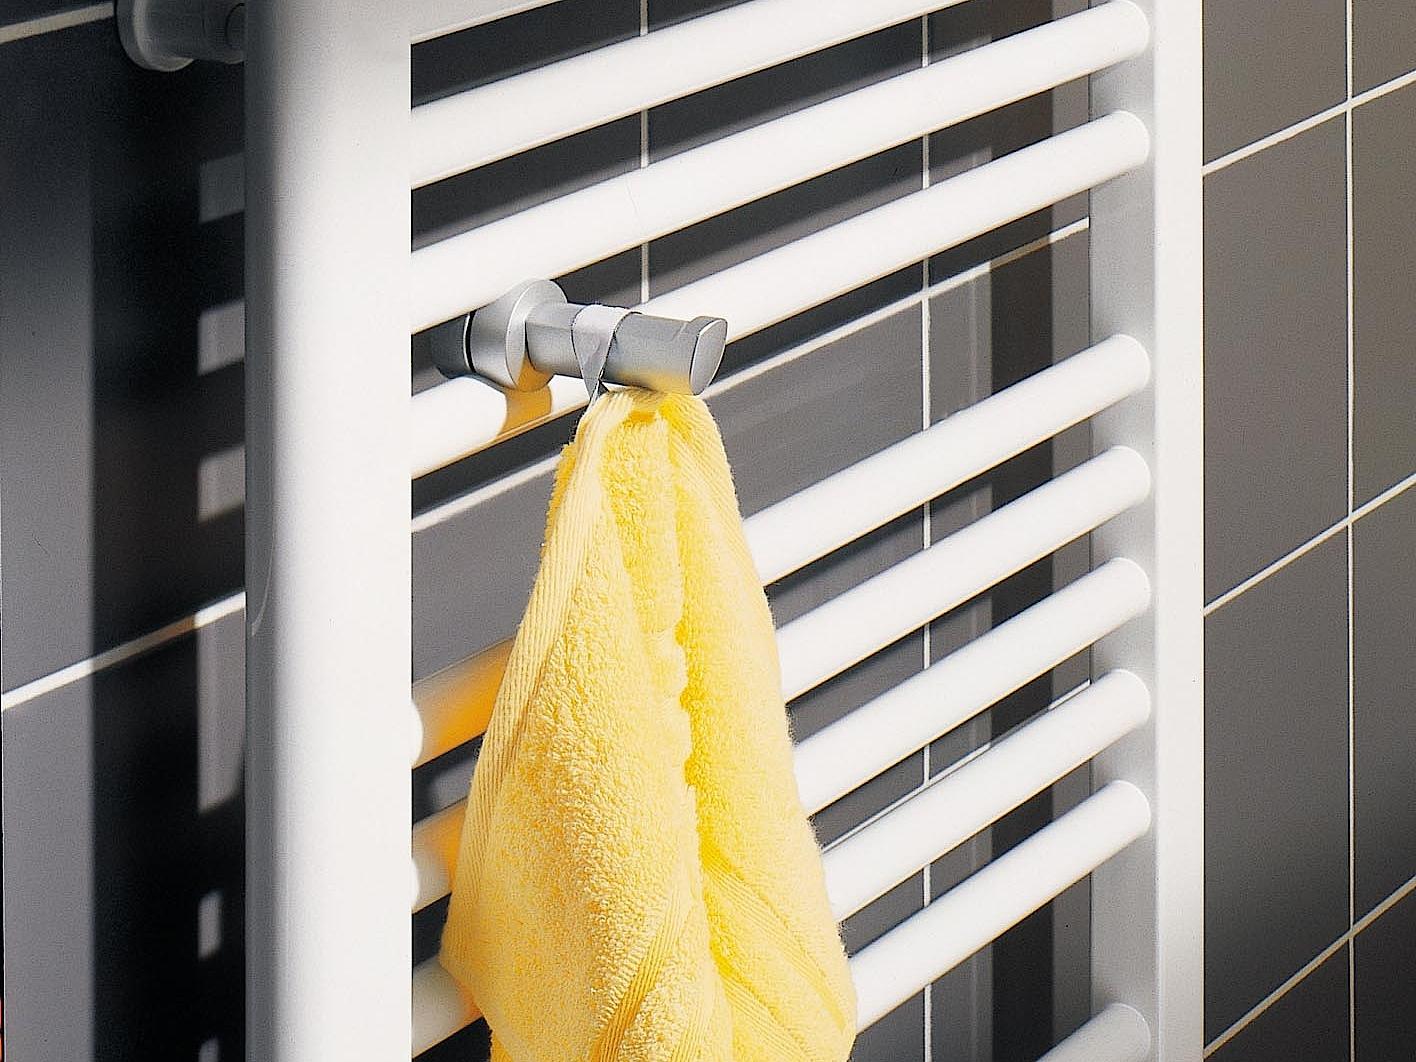 Towel rail for Kermi Basic-50 designer and bathroom radiators, Painted Aluminium or Chrome-plated.